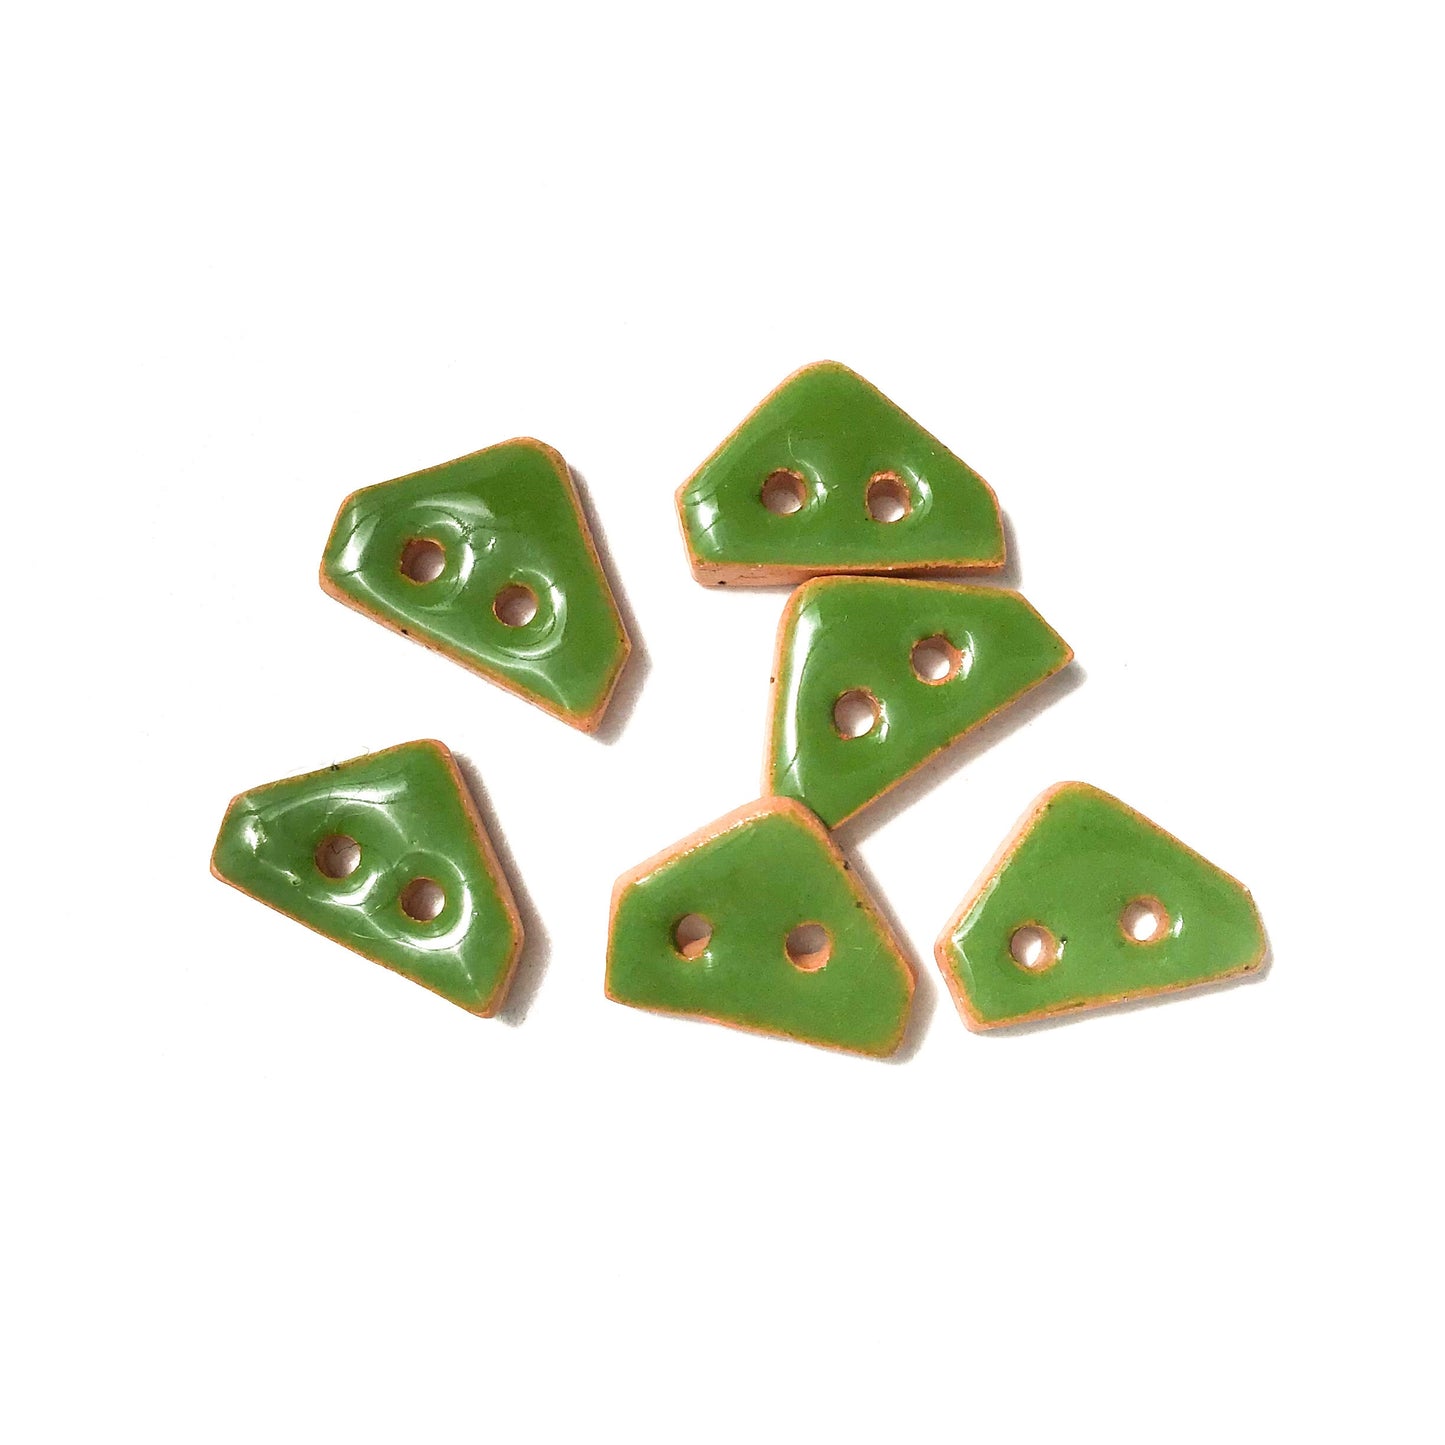 Shamrock Green Ceramic Buttons 3/8" x 1/2" - 6 Pack